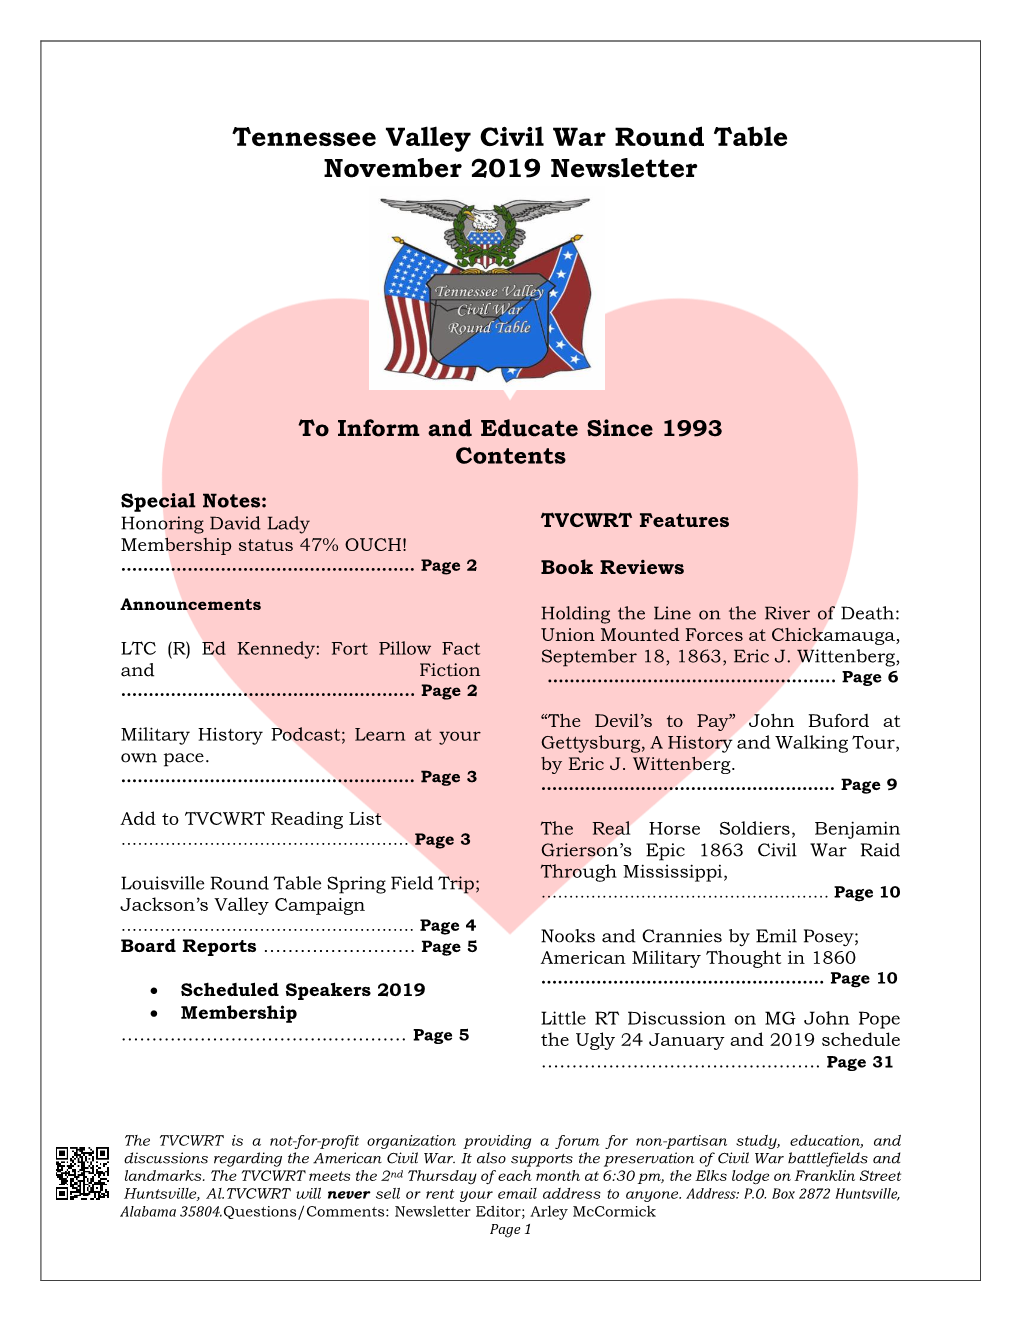 Tennessee Valley Civil War Round Table November 2019 Newsletter